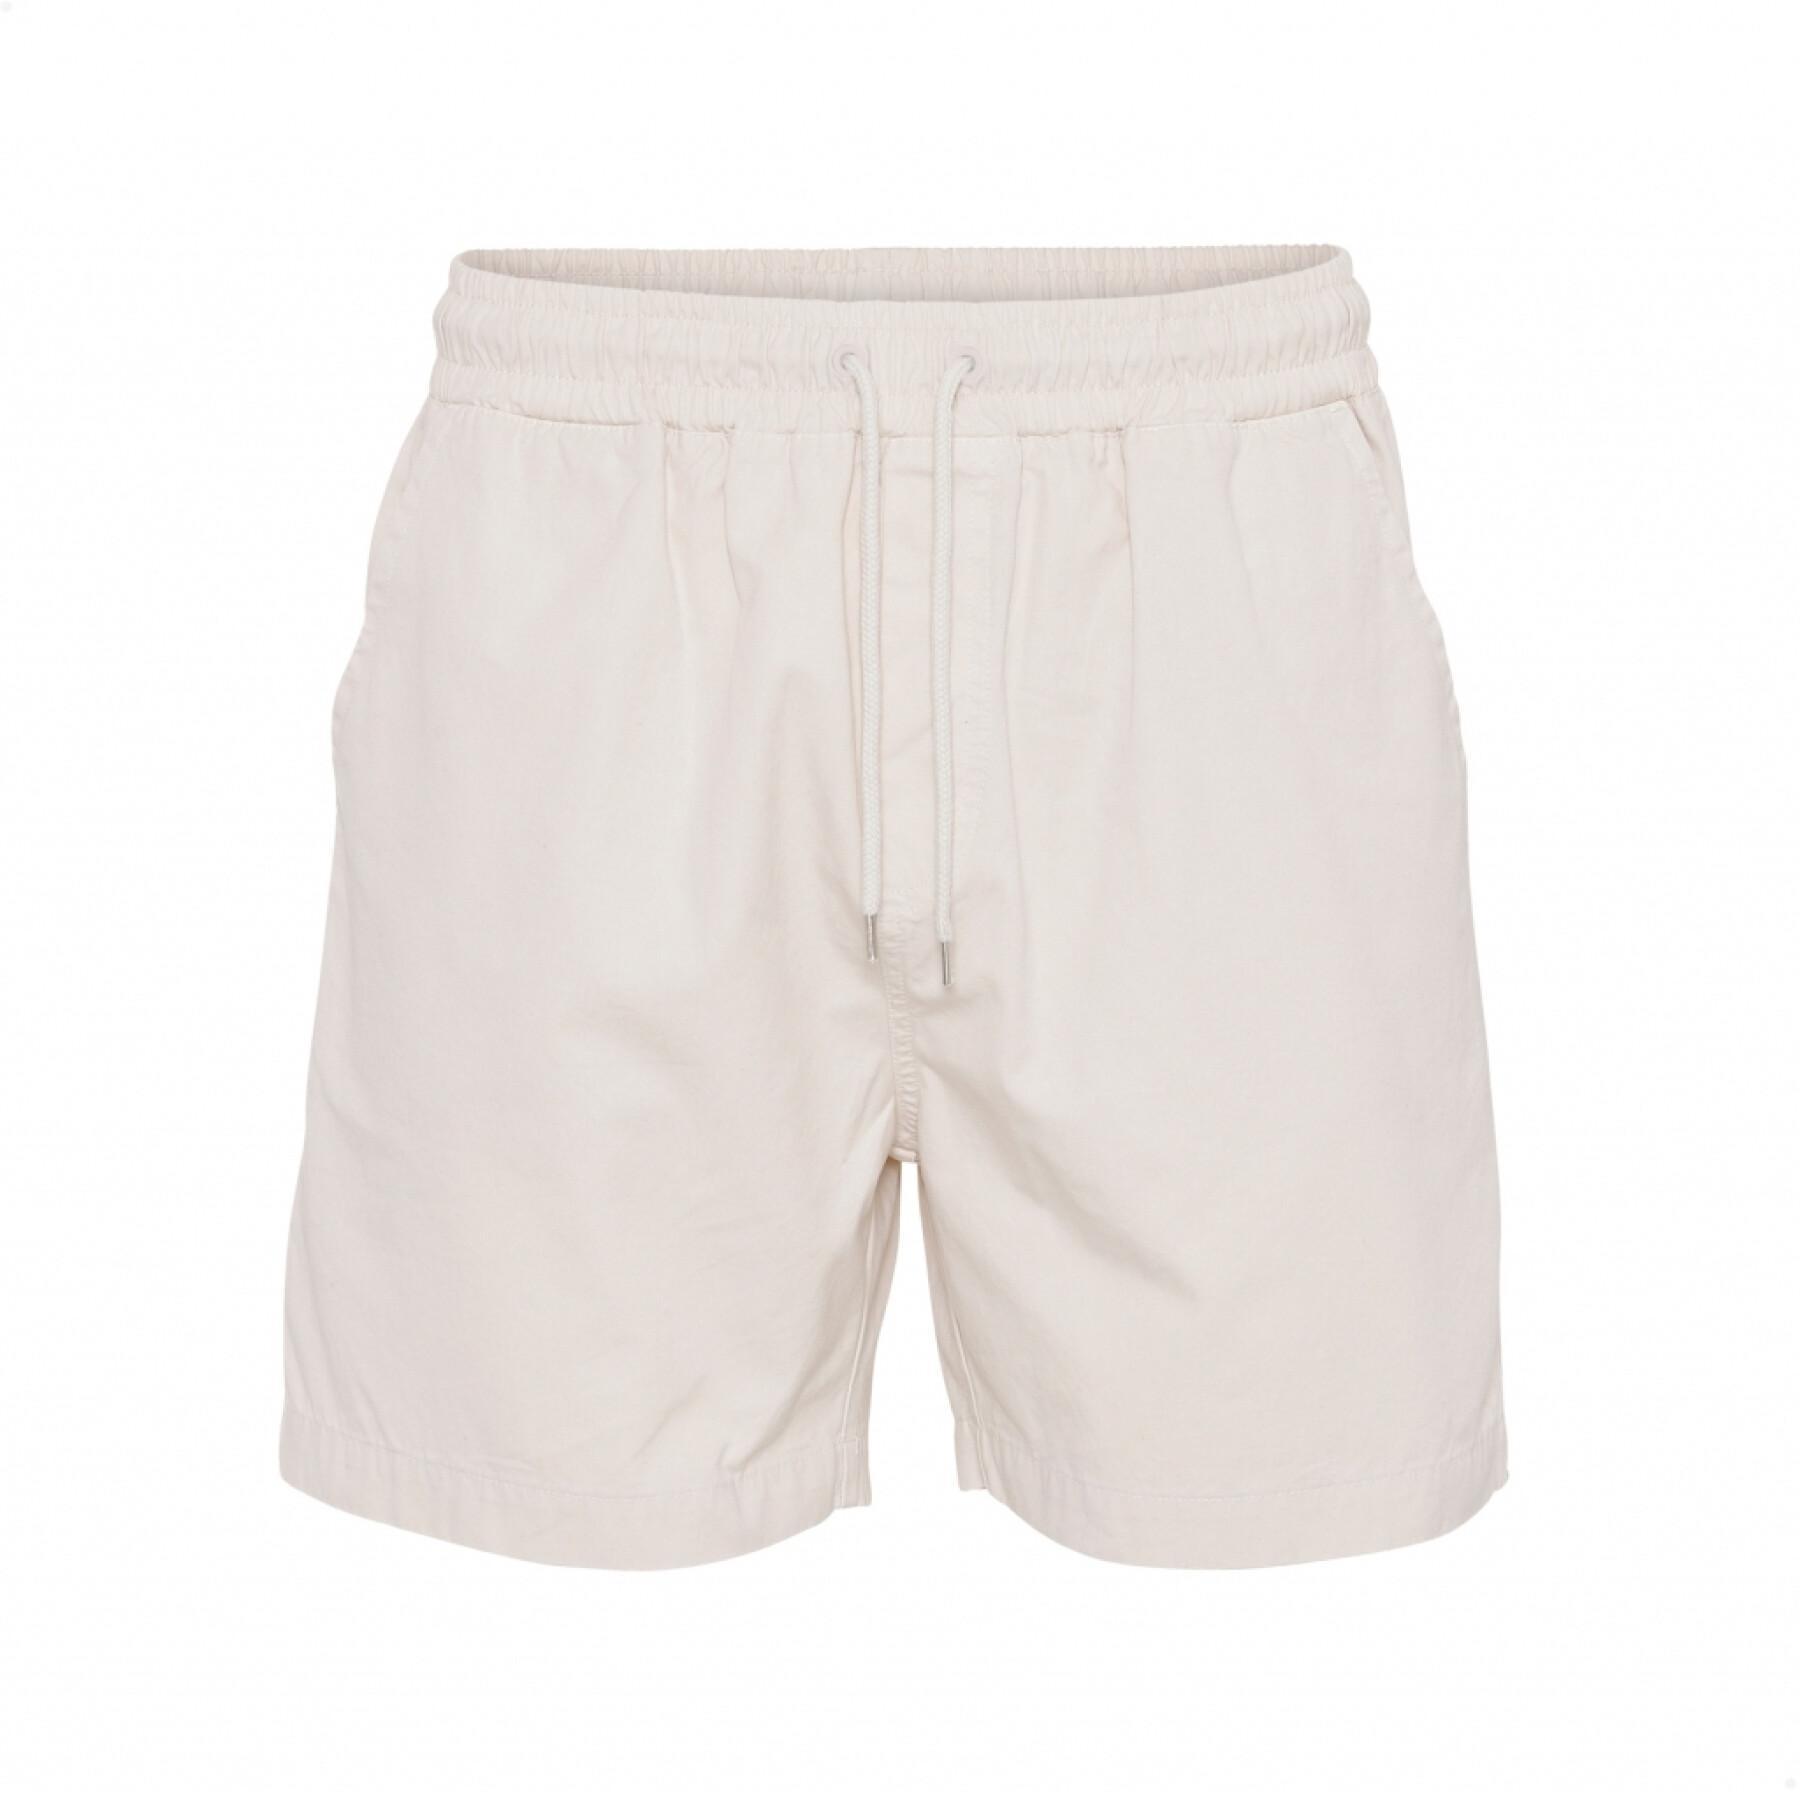 Twill shorts Colorful Standard Organic ivory white